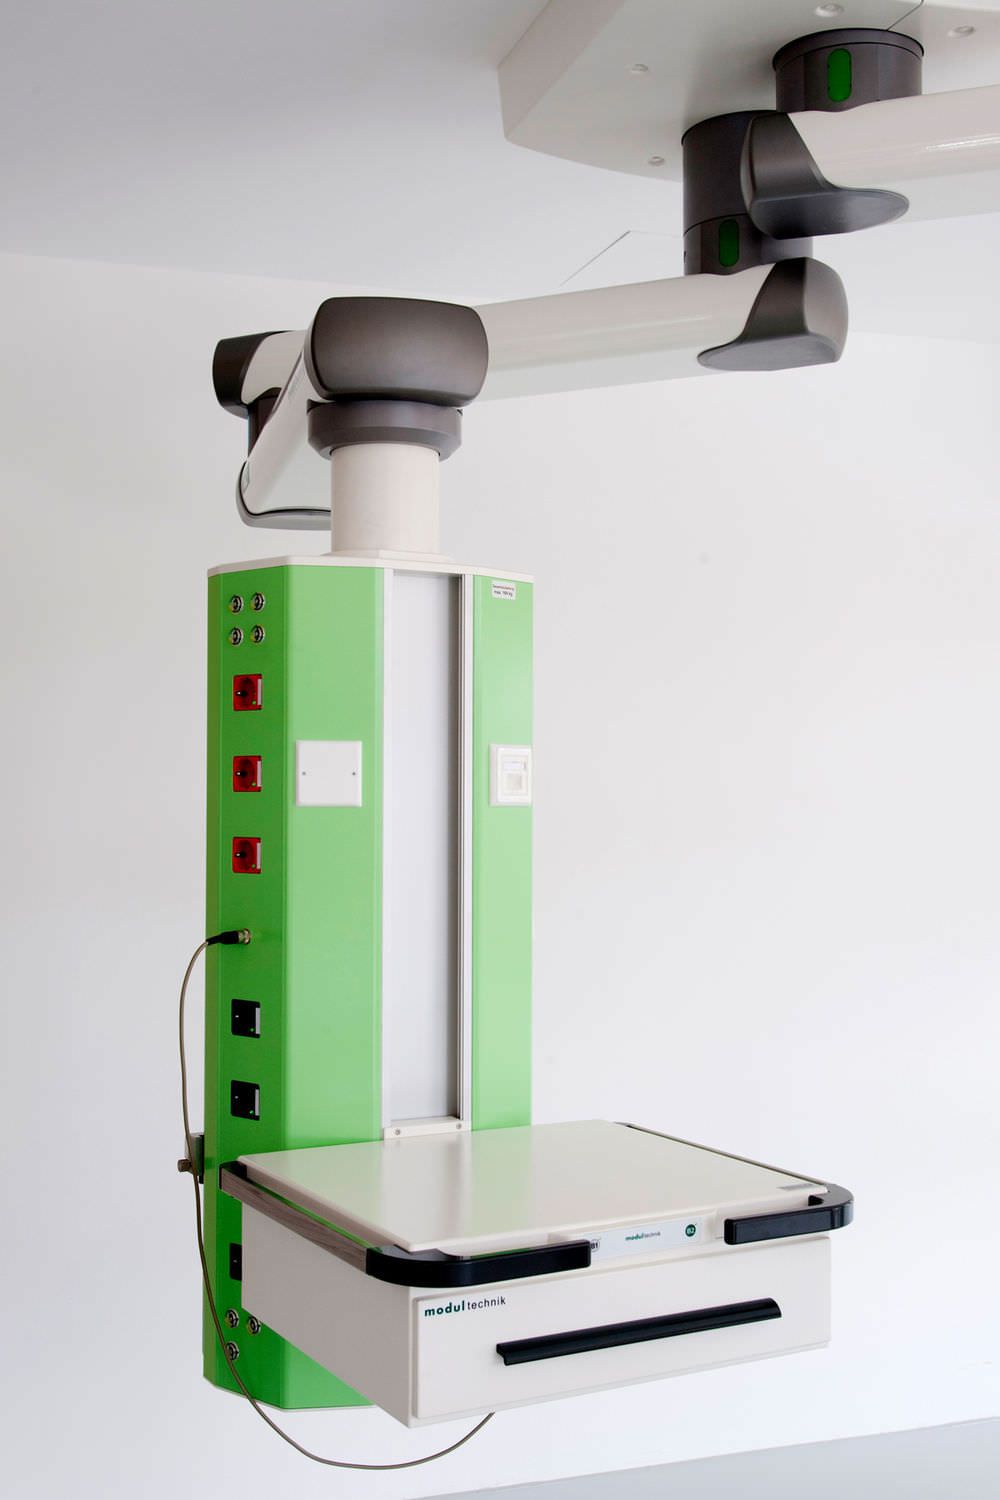 Ceiling-mounted medical pendant moduversa Modul technik